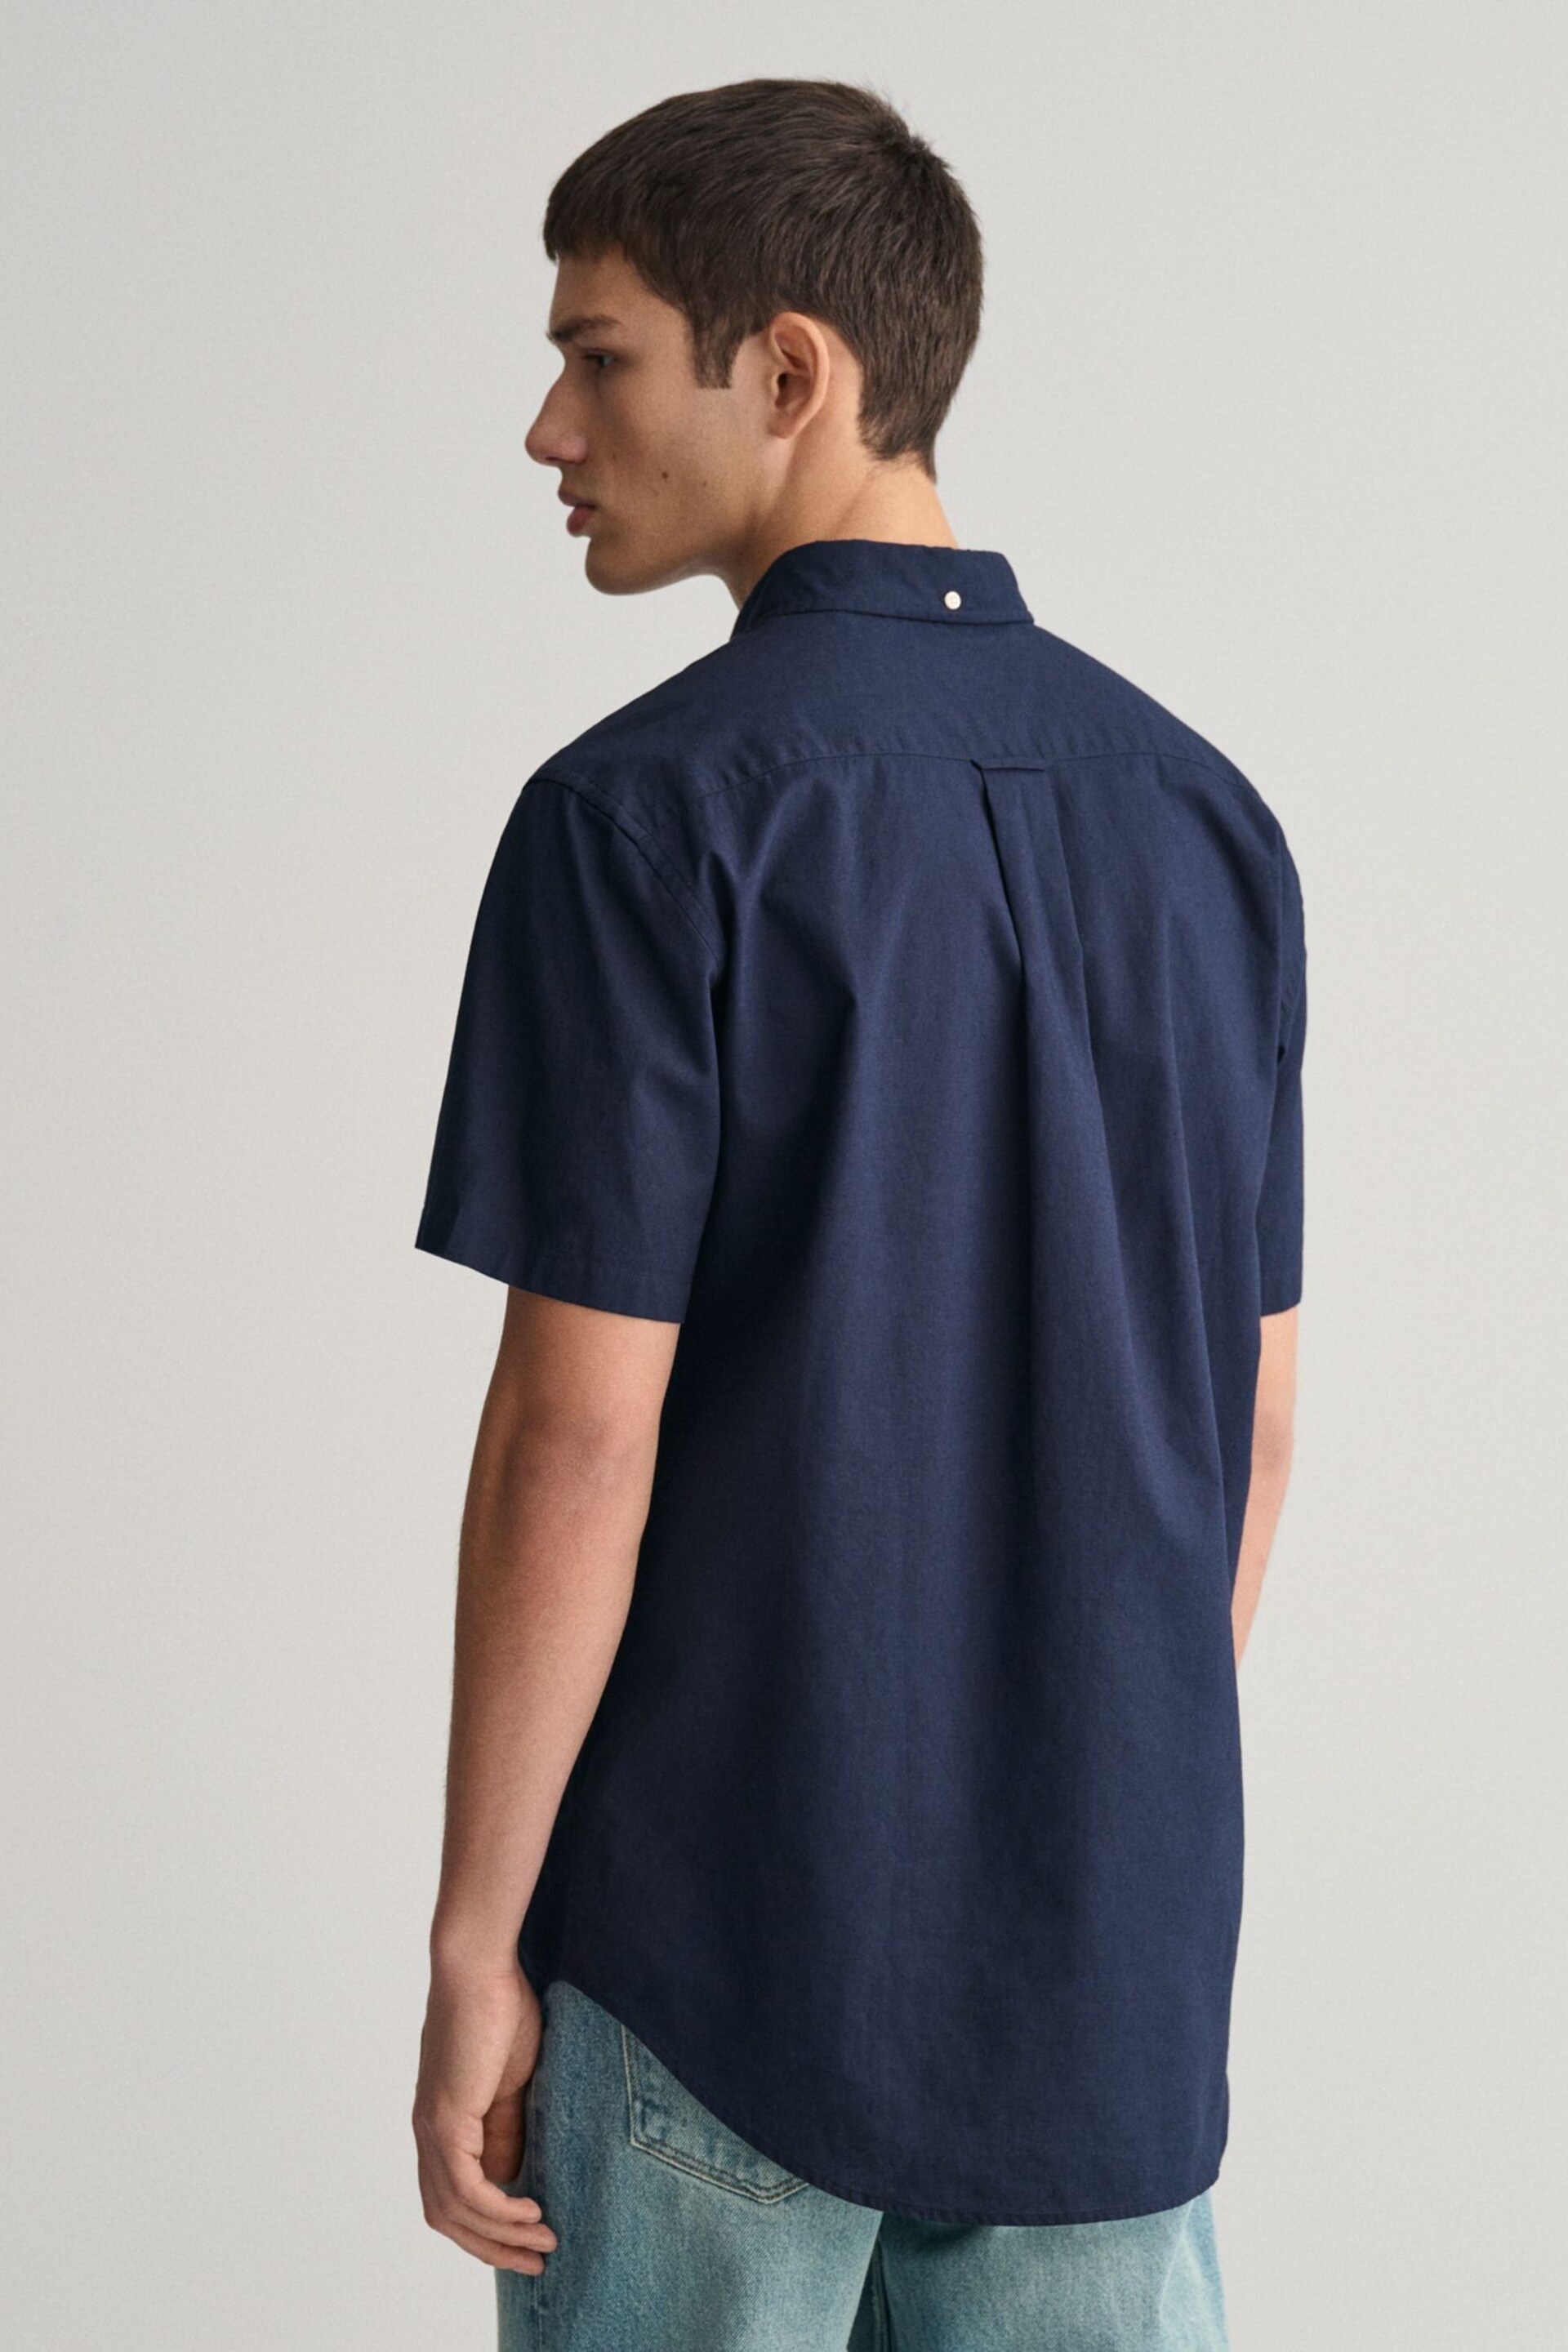 GANT Dark Blue Regular Fit Cotton Linen Short Sleeve Shirt - Image 6 of 7